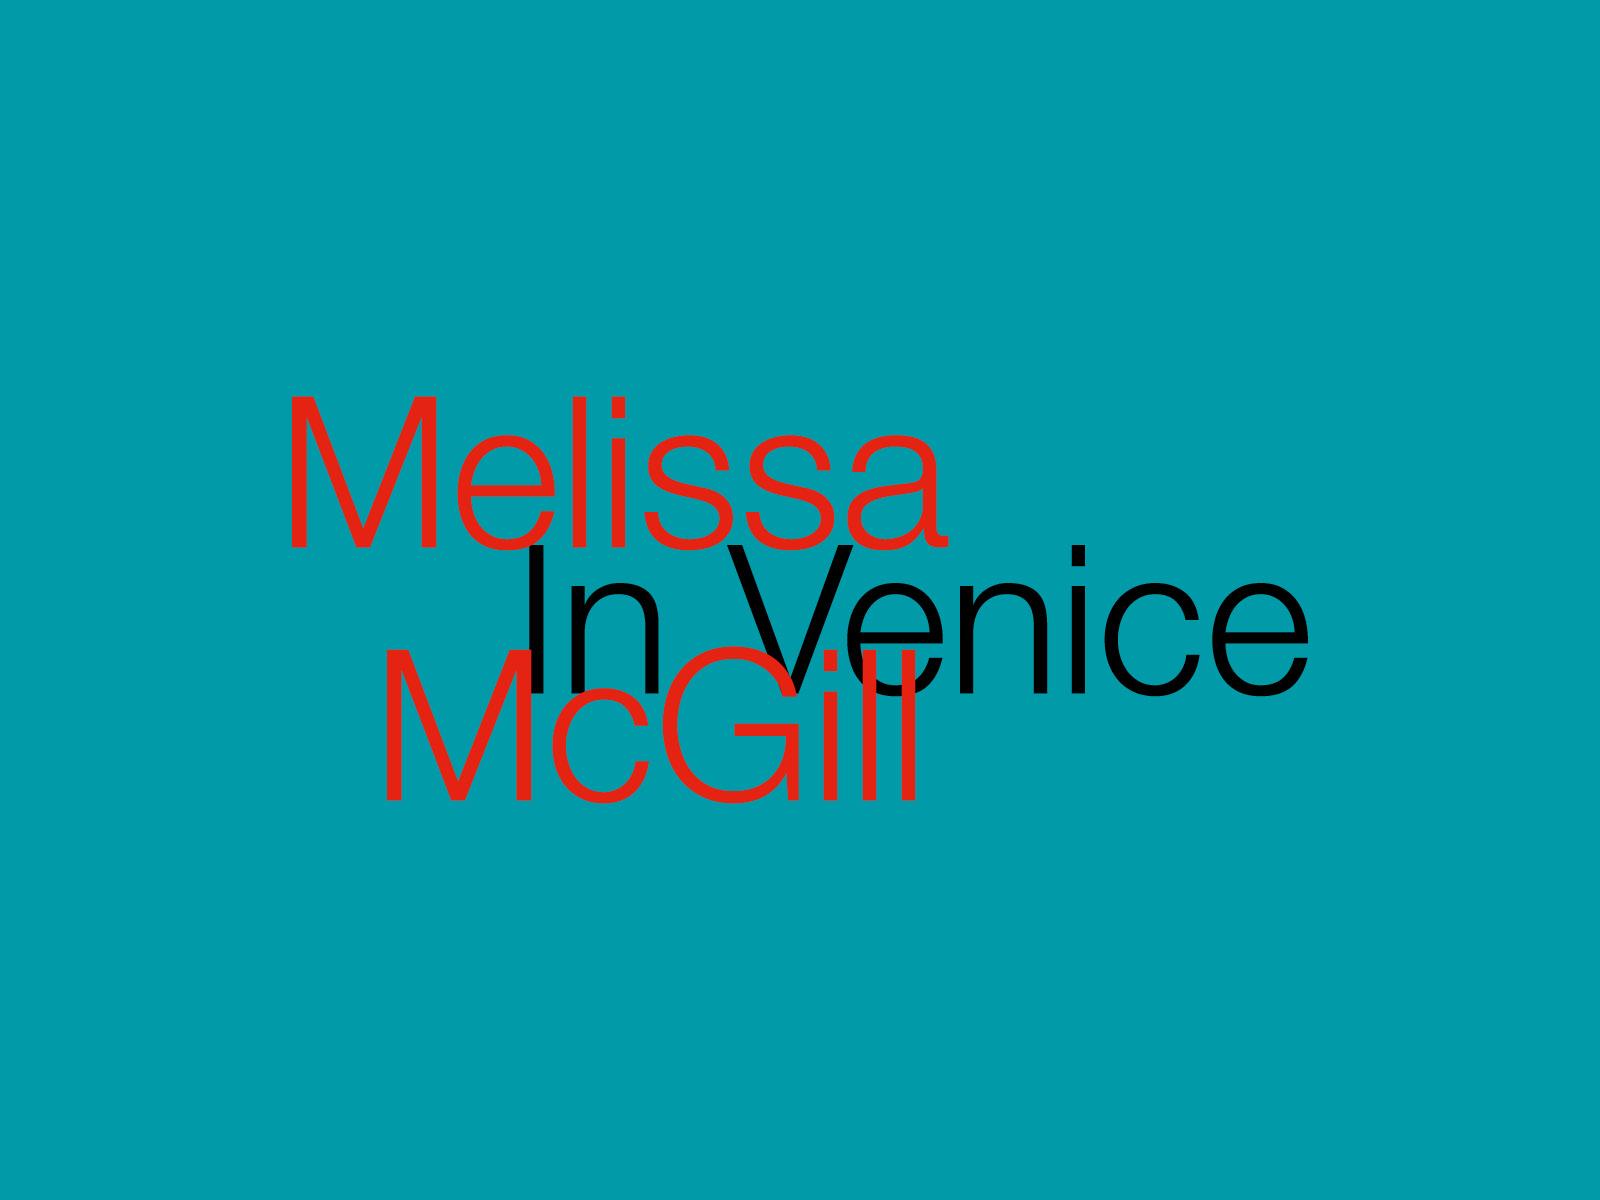 Melissa McGill: In Venice